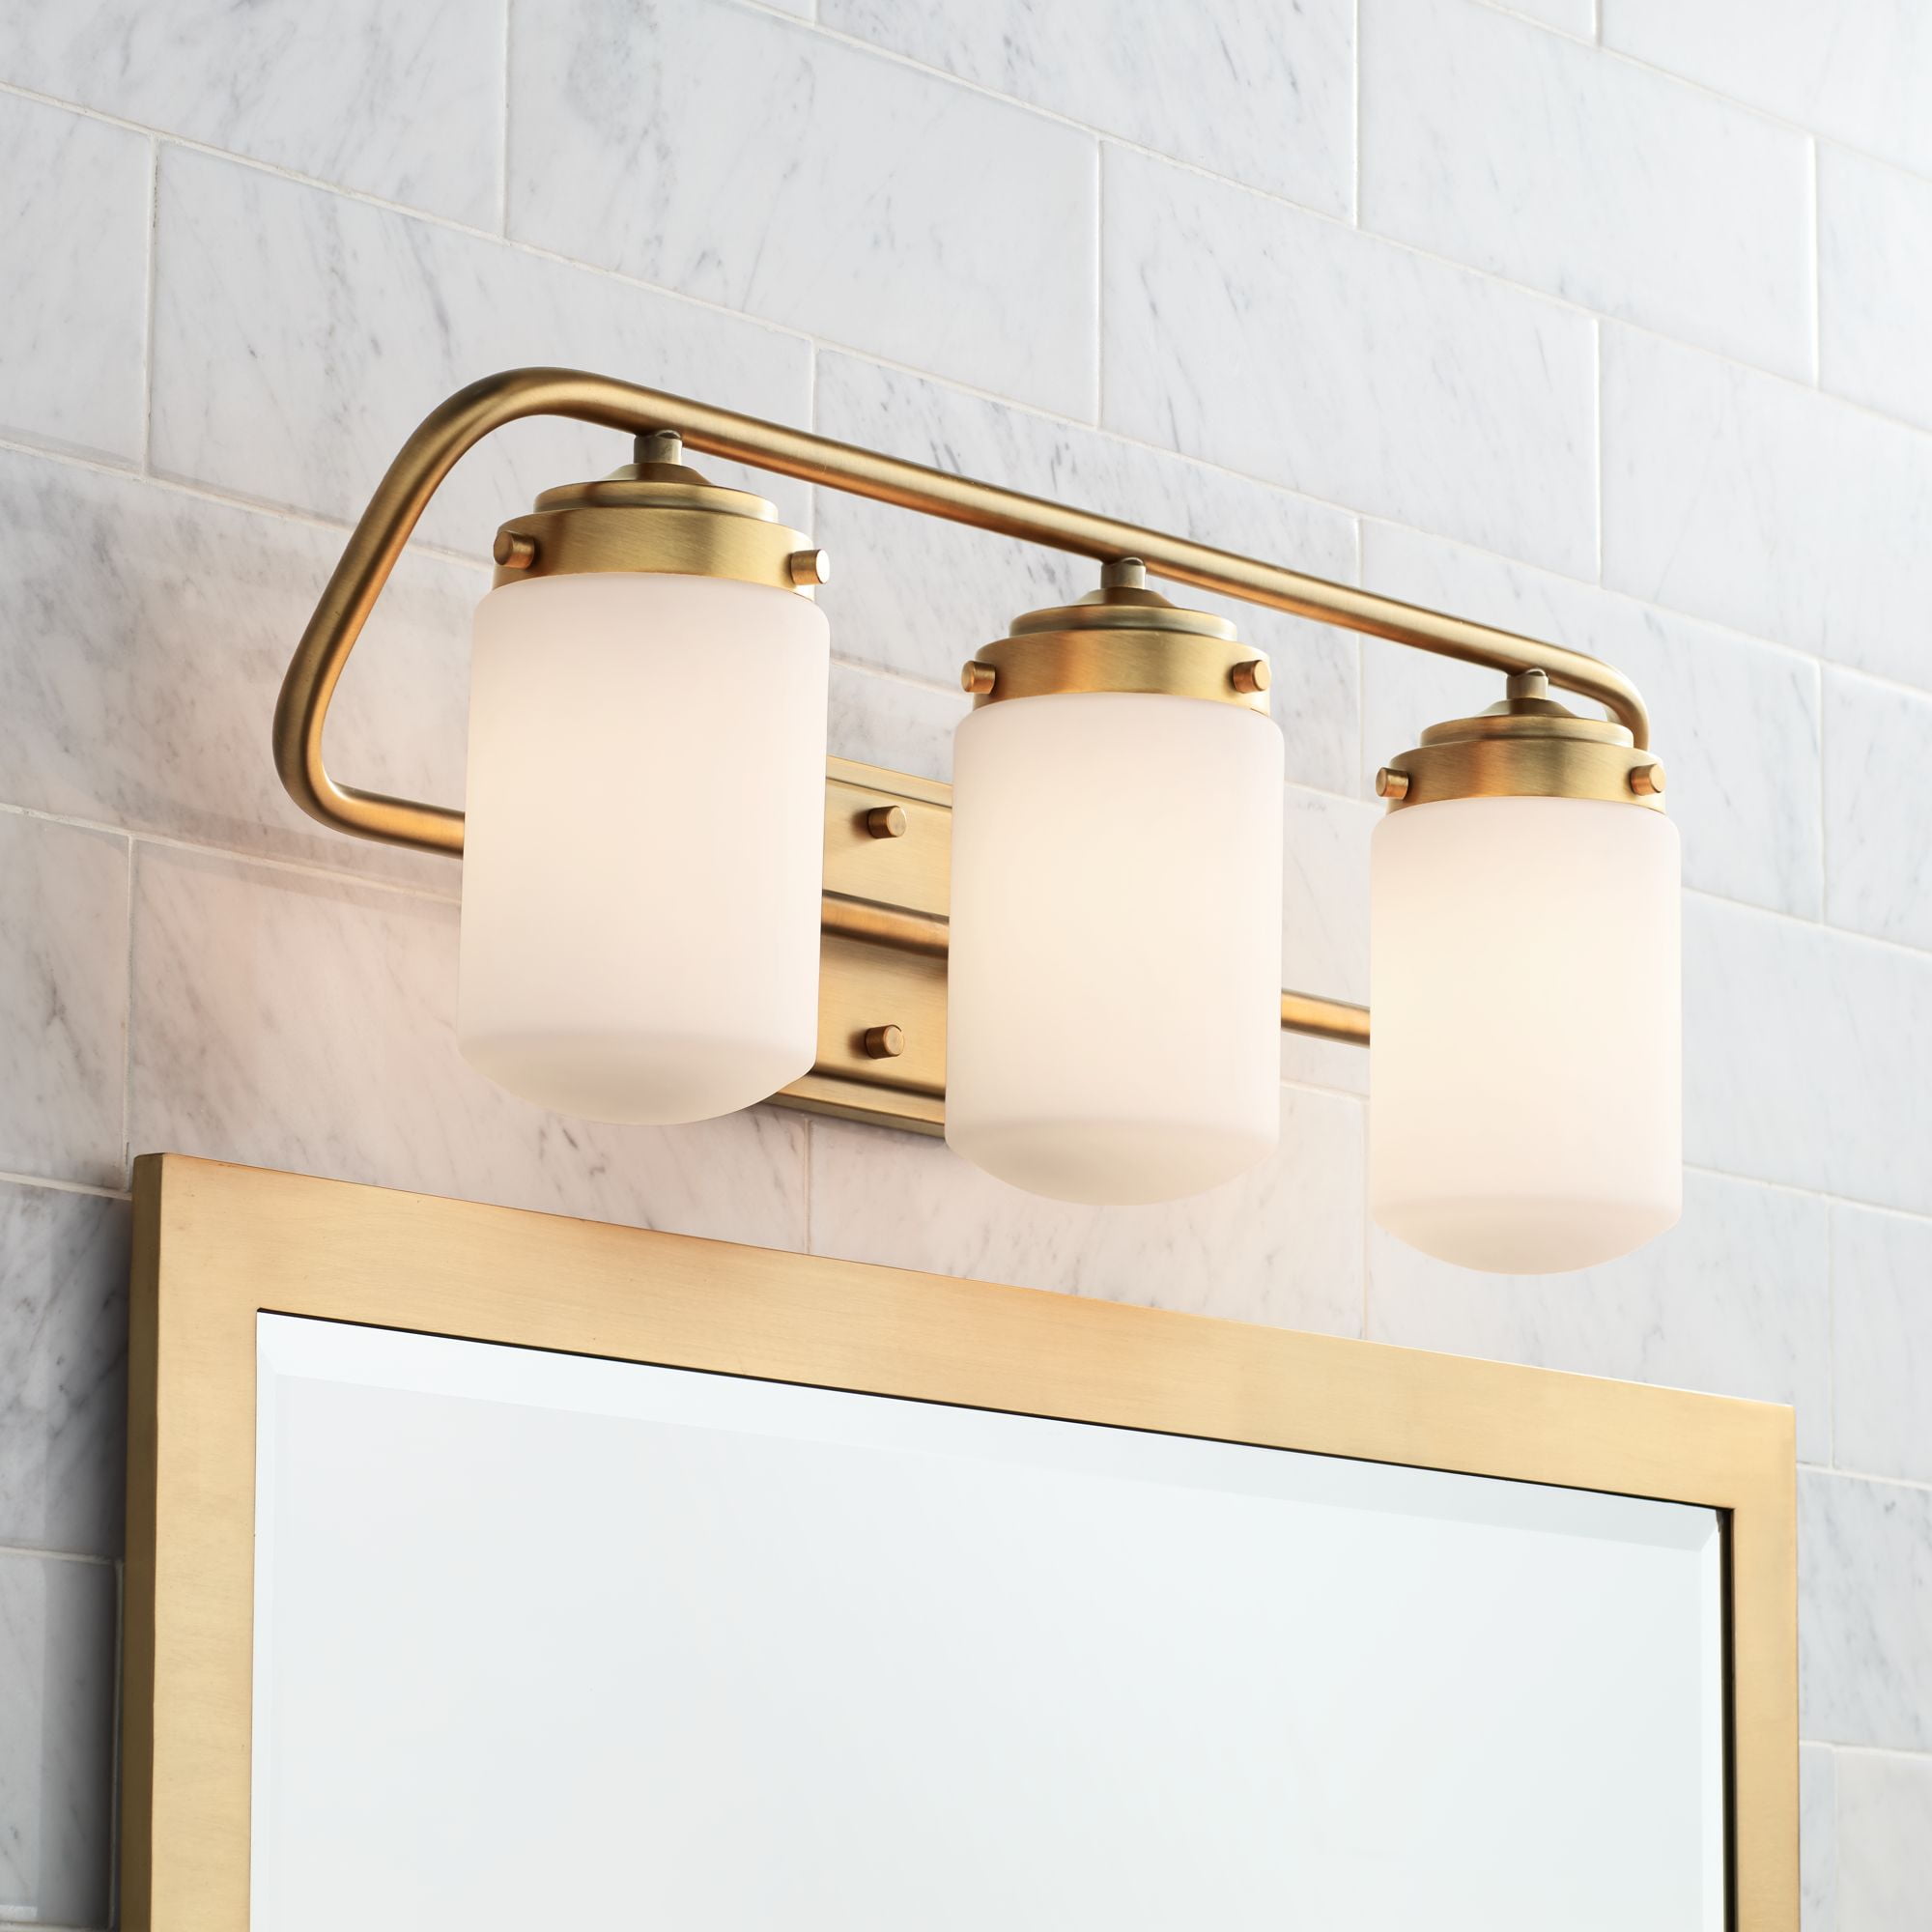 Possini Euro Design Modern Wall Light, Antique Bathroom Light Fixtures